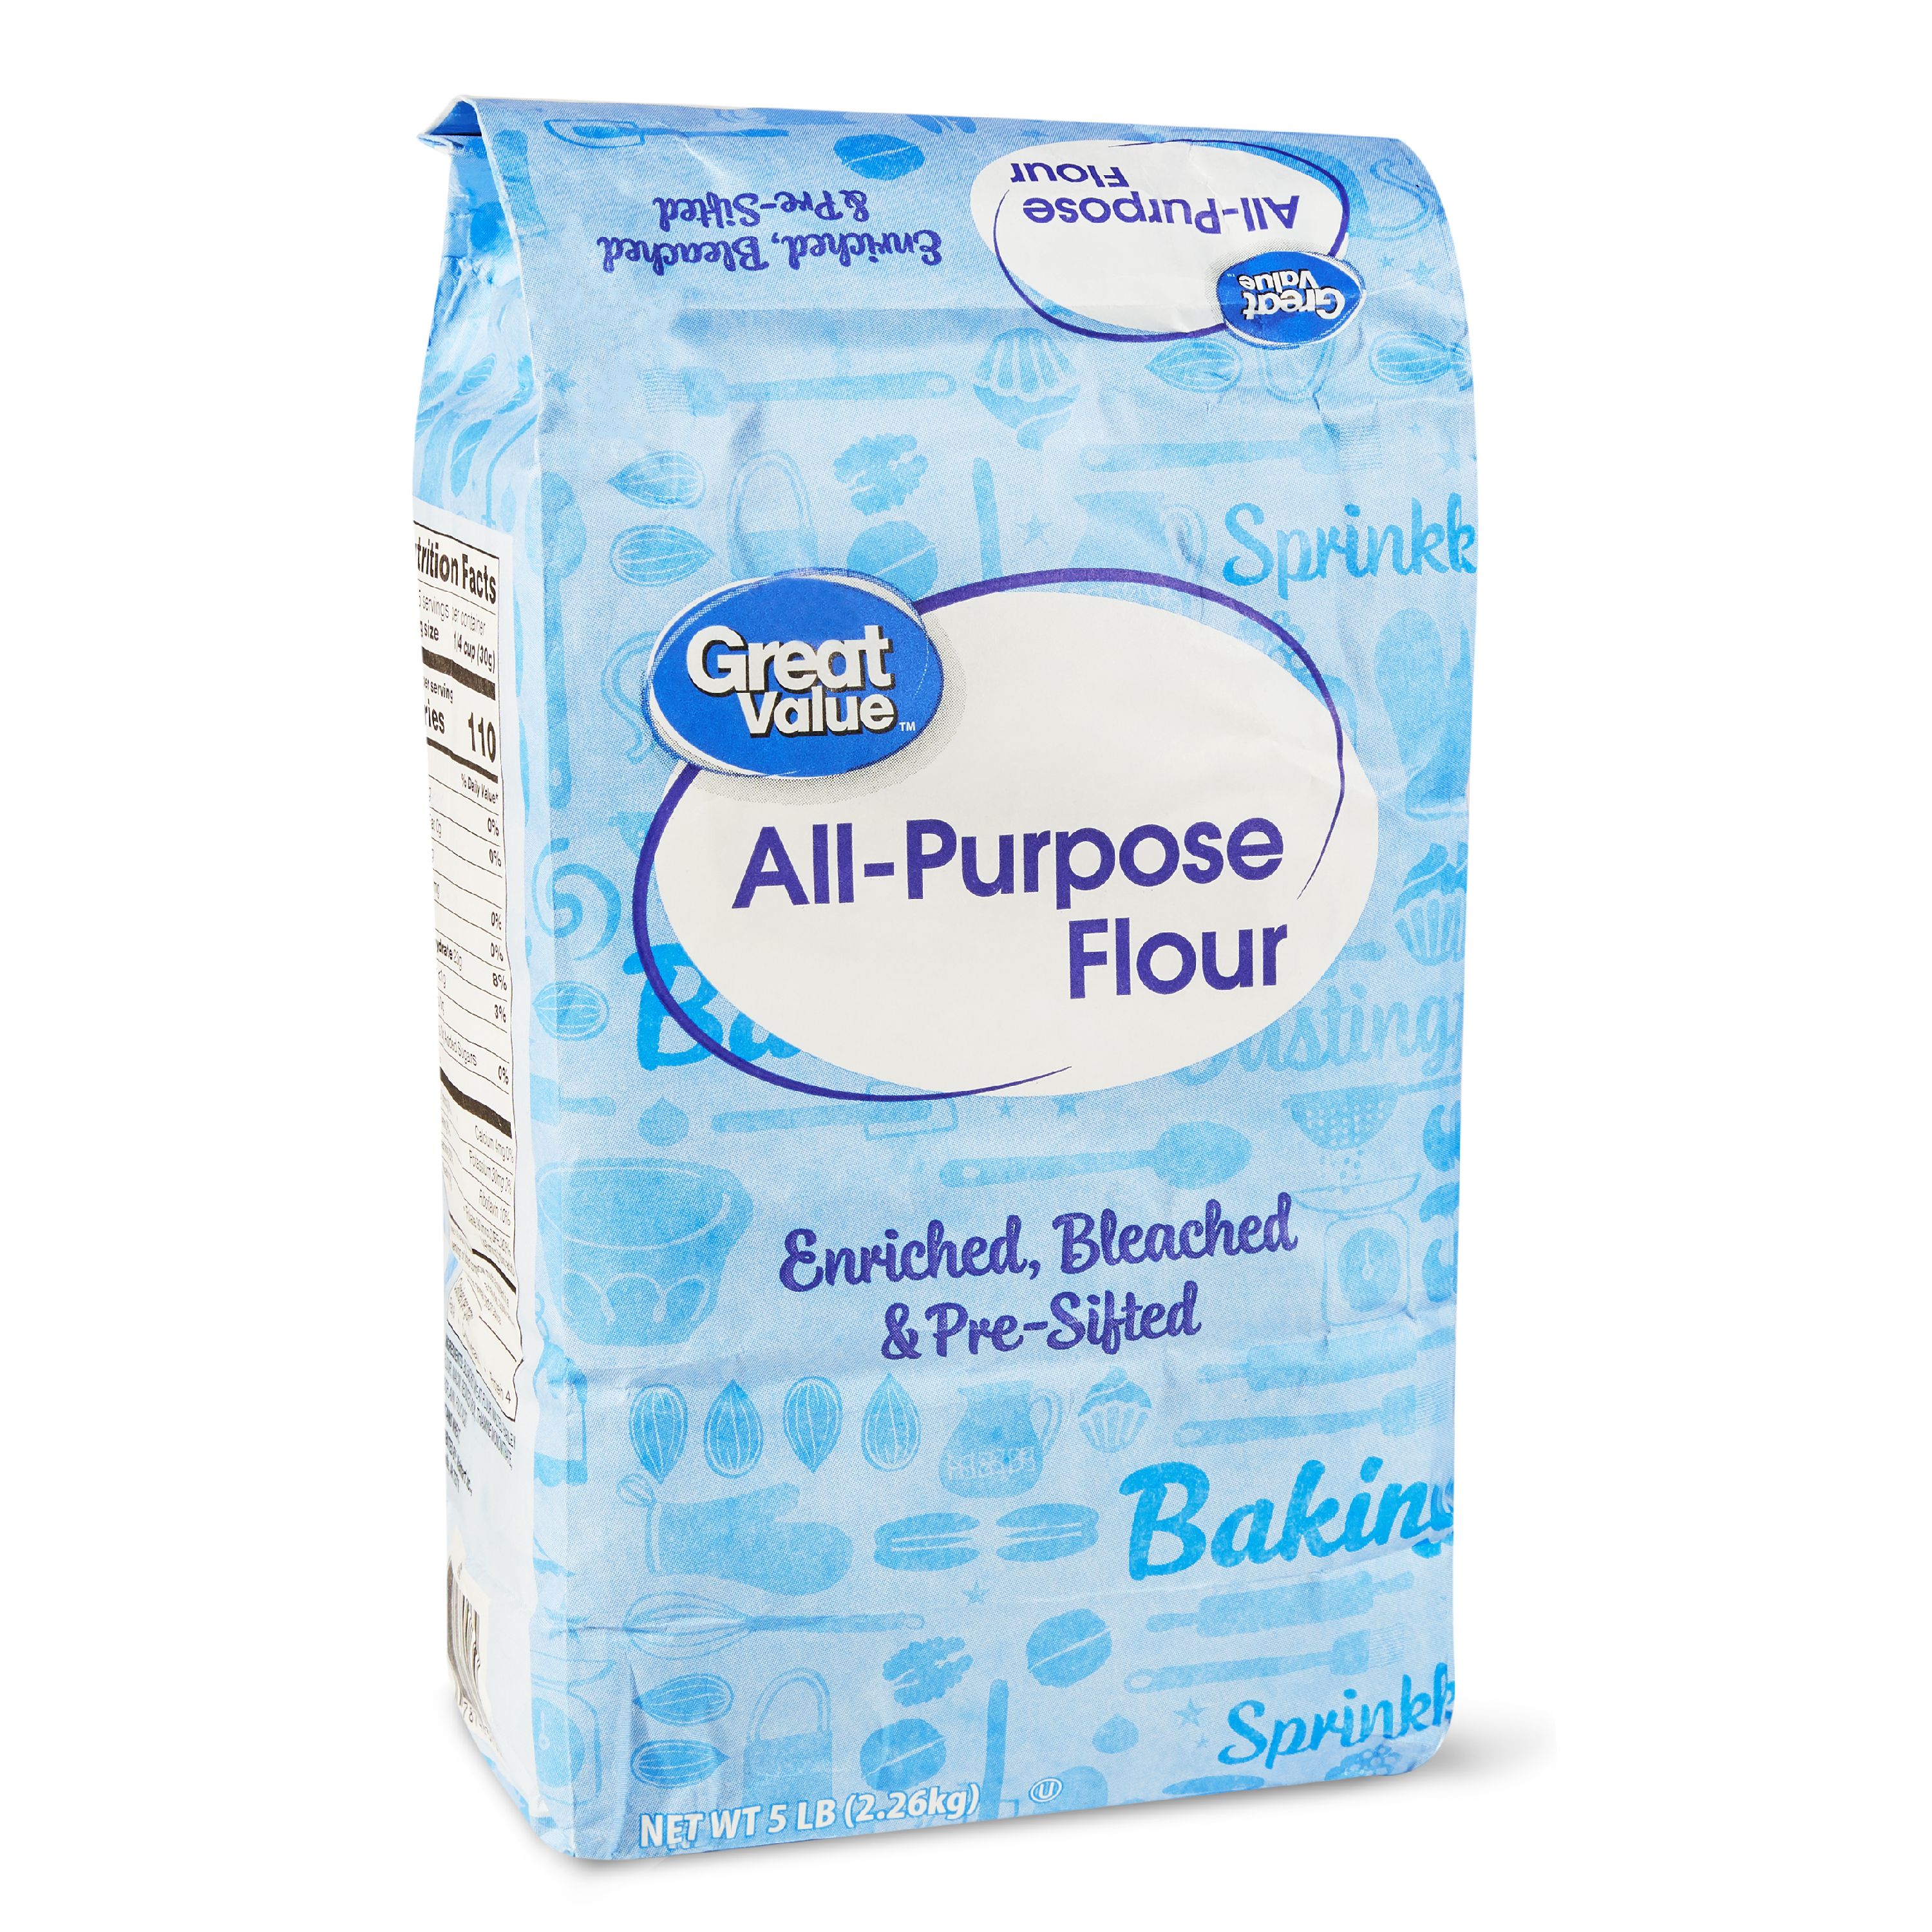 Great Value All-Purpose Flour, 5 Lb Image